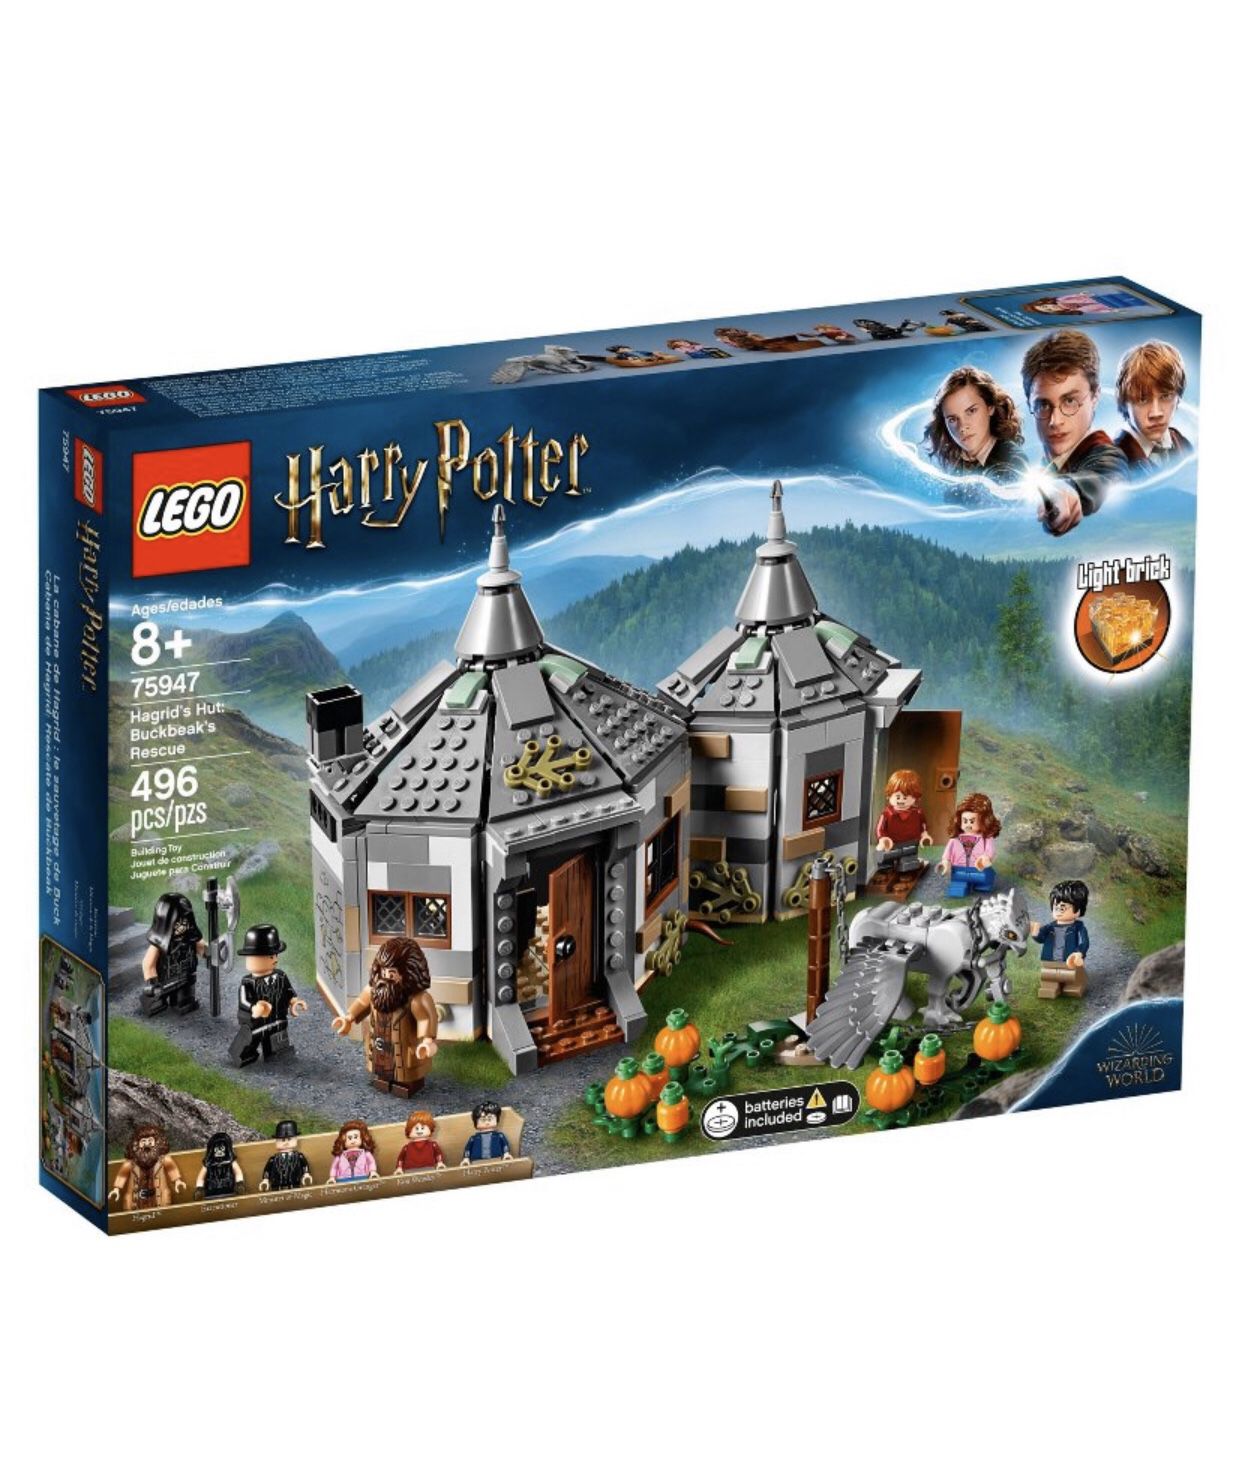 BRAND NEW!! LEGO Harry Potter Hagrid's Hut: Buckbeak's Rescue